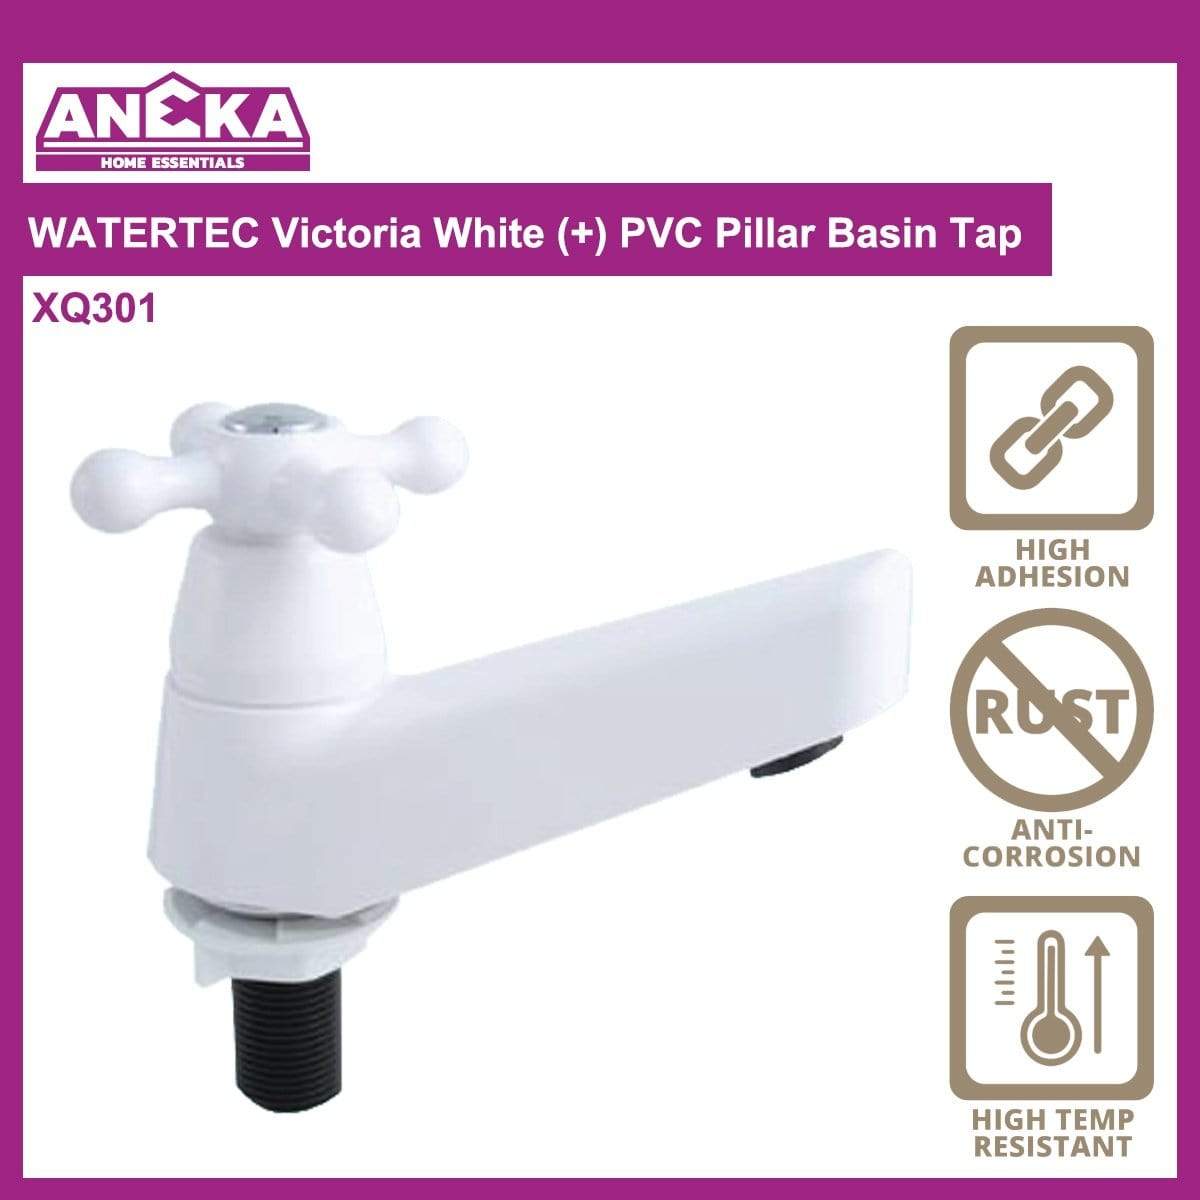 WATERTEC Victoria White (+) PVC Pillar Basin Tap XQ301